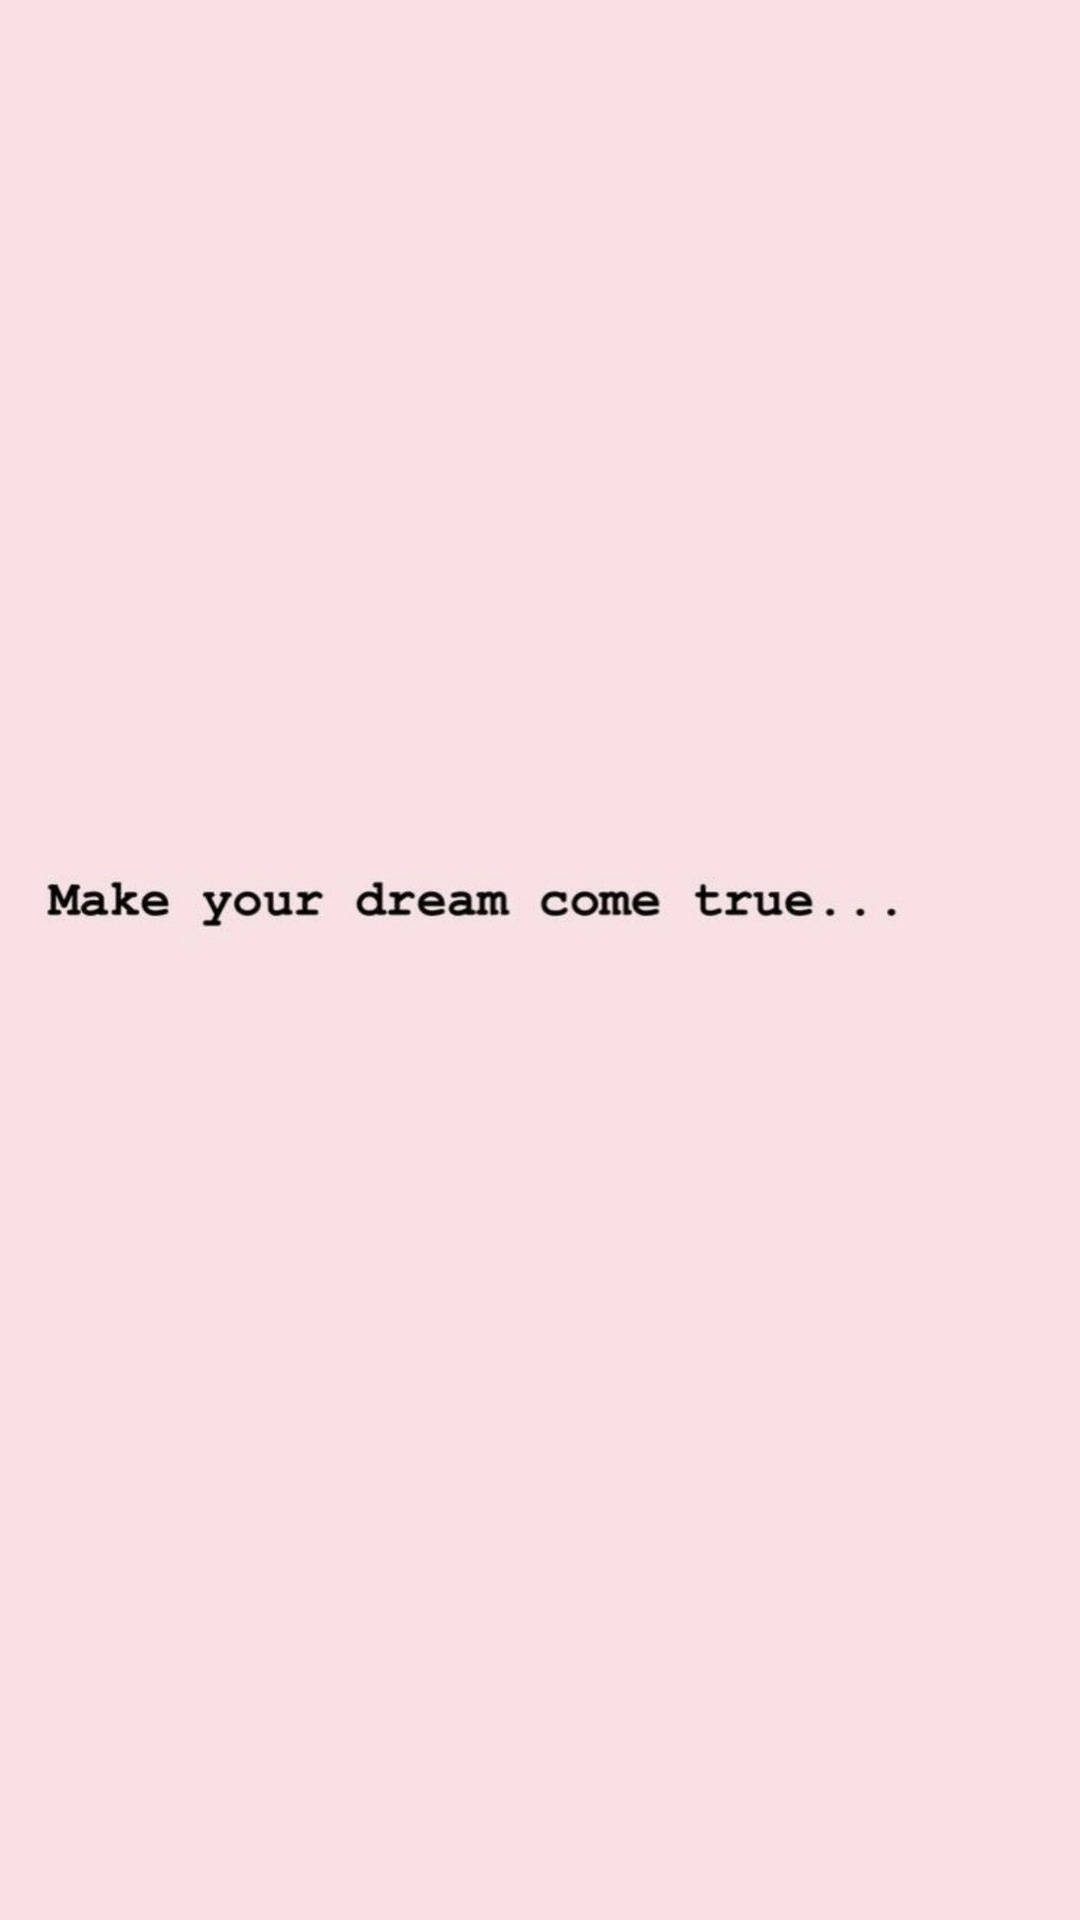 Download Aesthetic Quotes Dreams Come True Wallpaper 